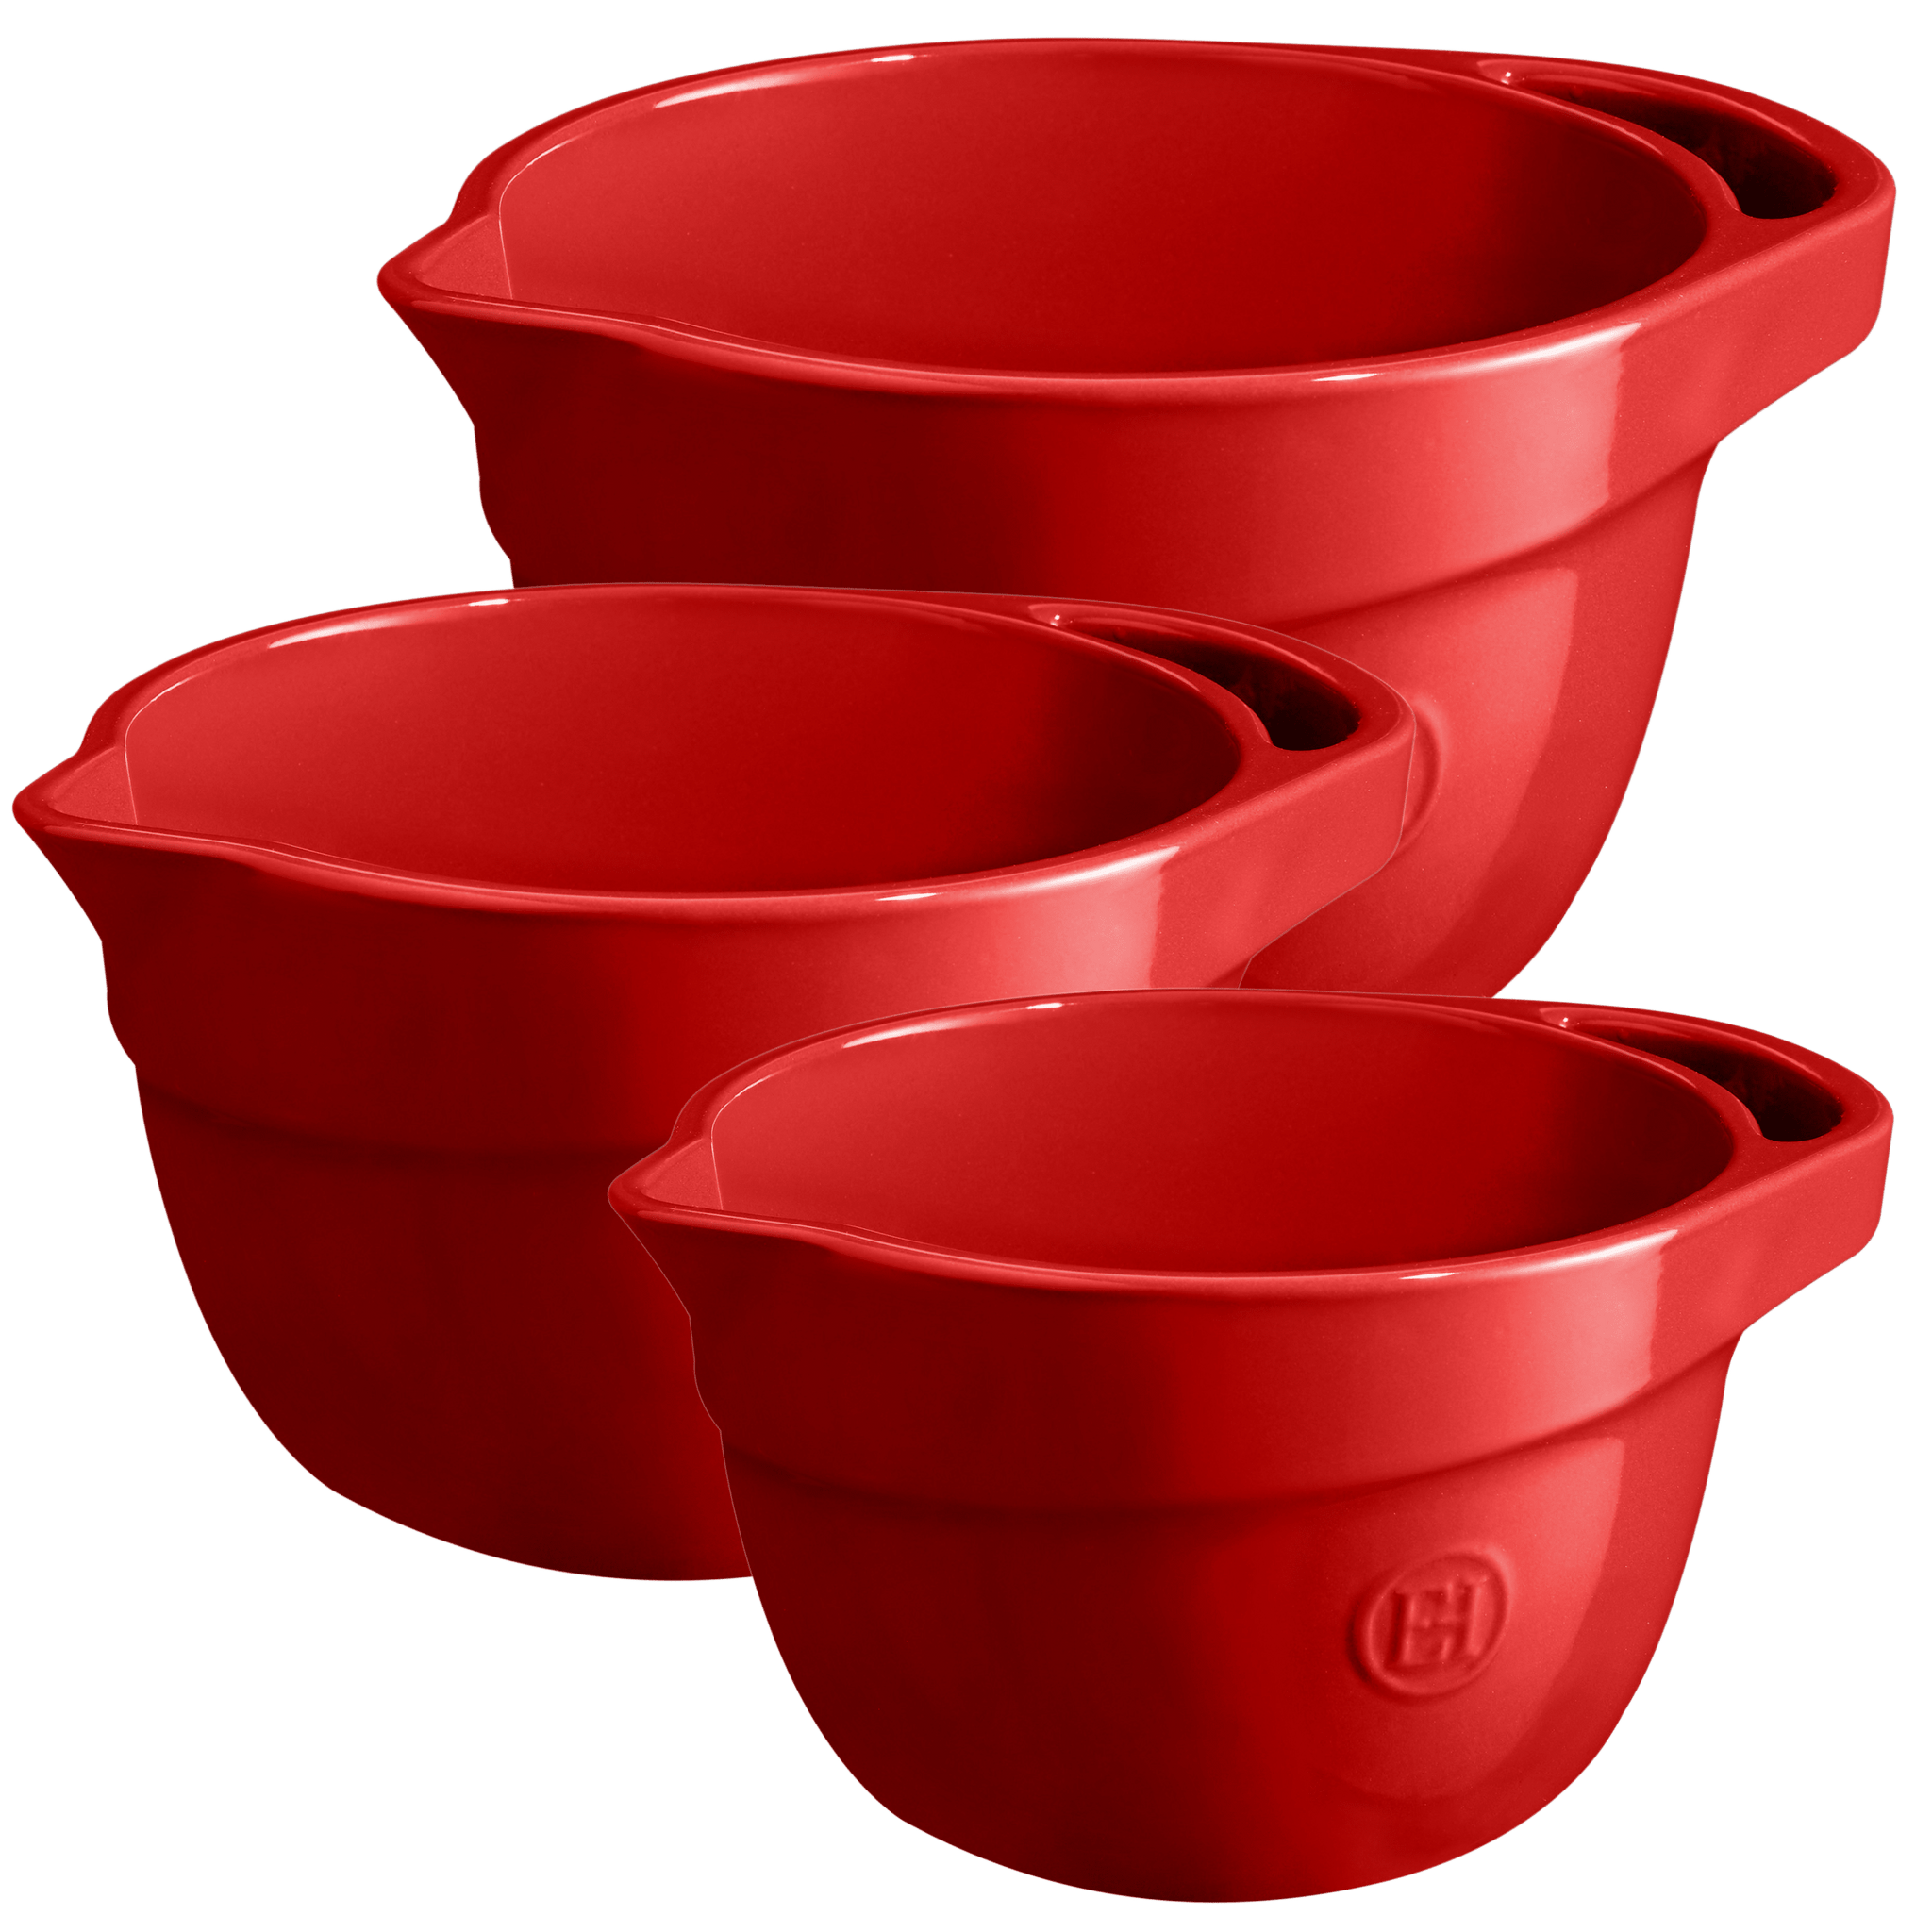 Red Stripe Ceramic Mixing Bowls, Set of 3 + Reviews